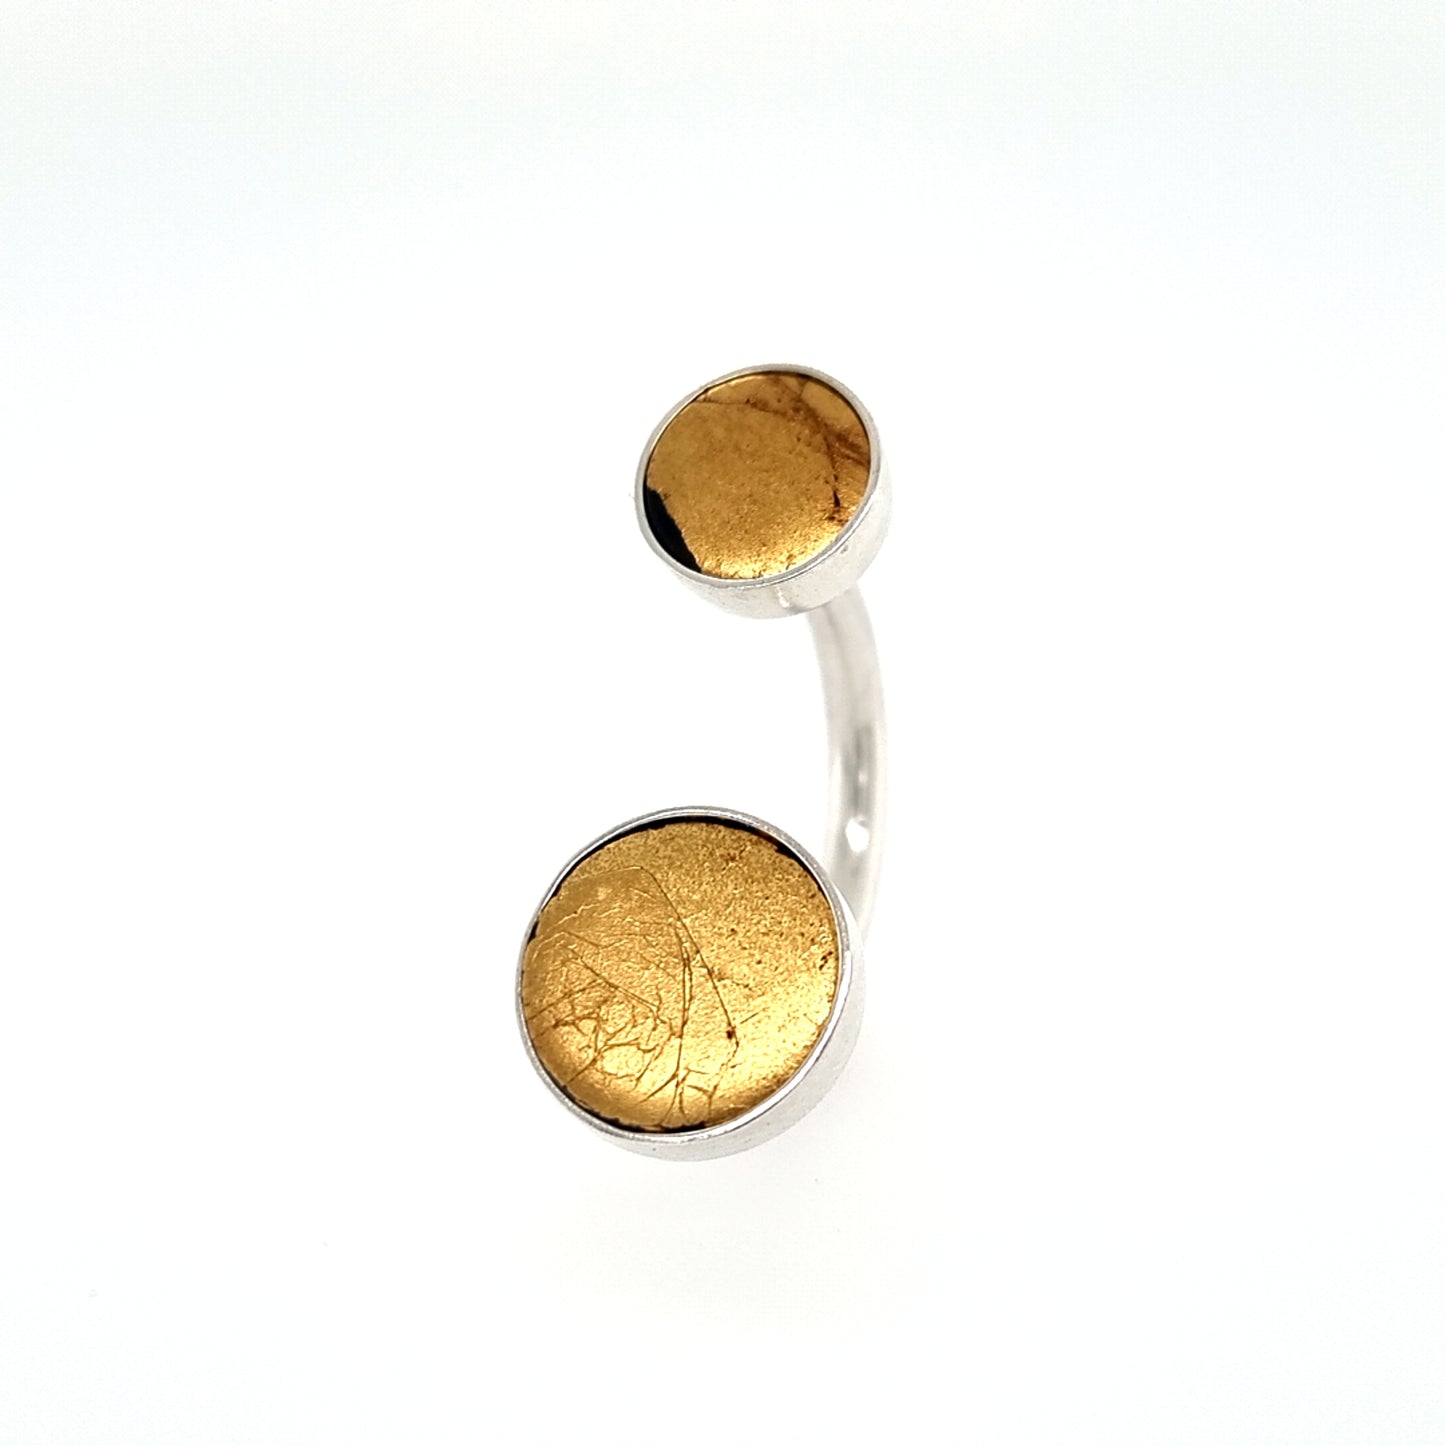 Haku-e Floating Ring with 22k gold leaf